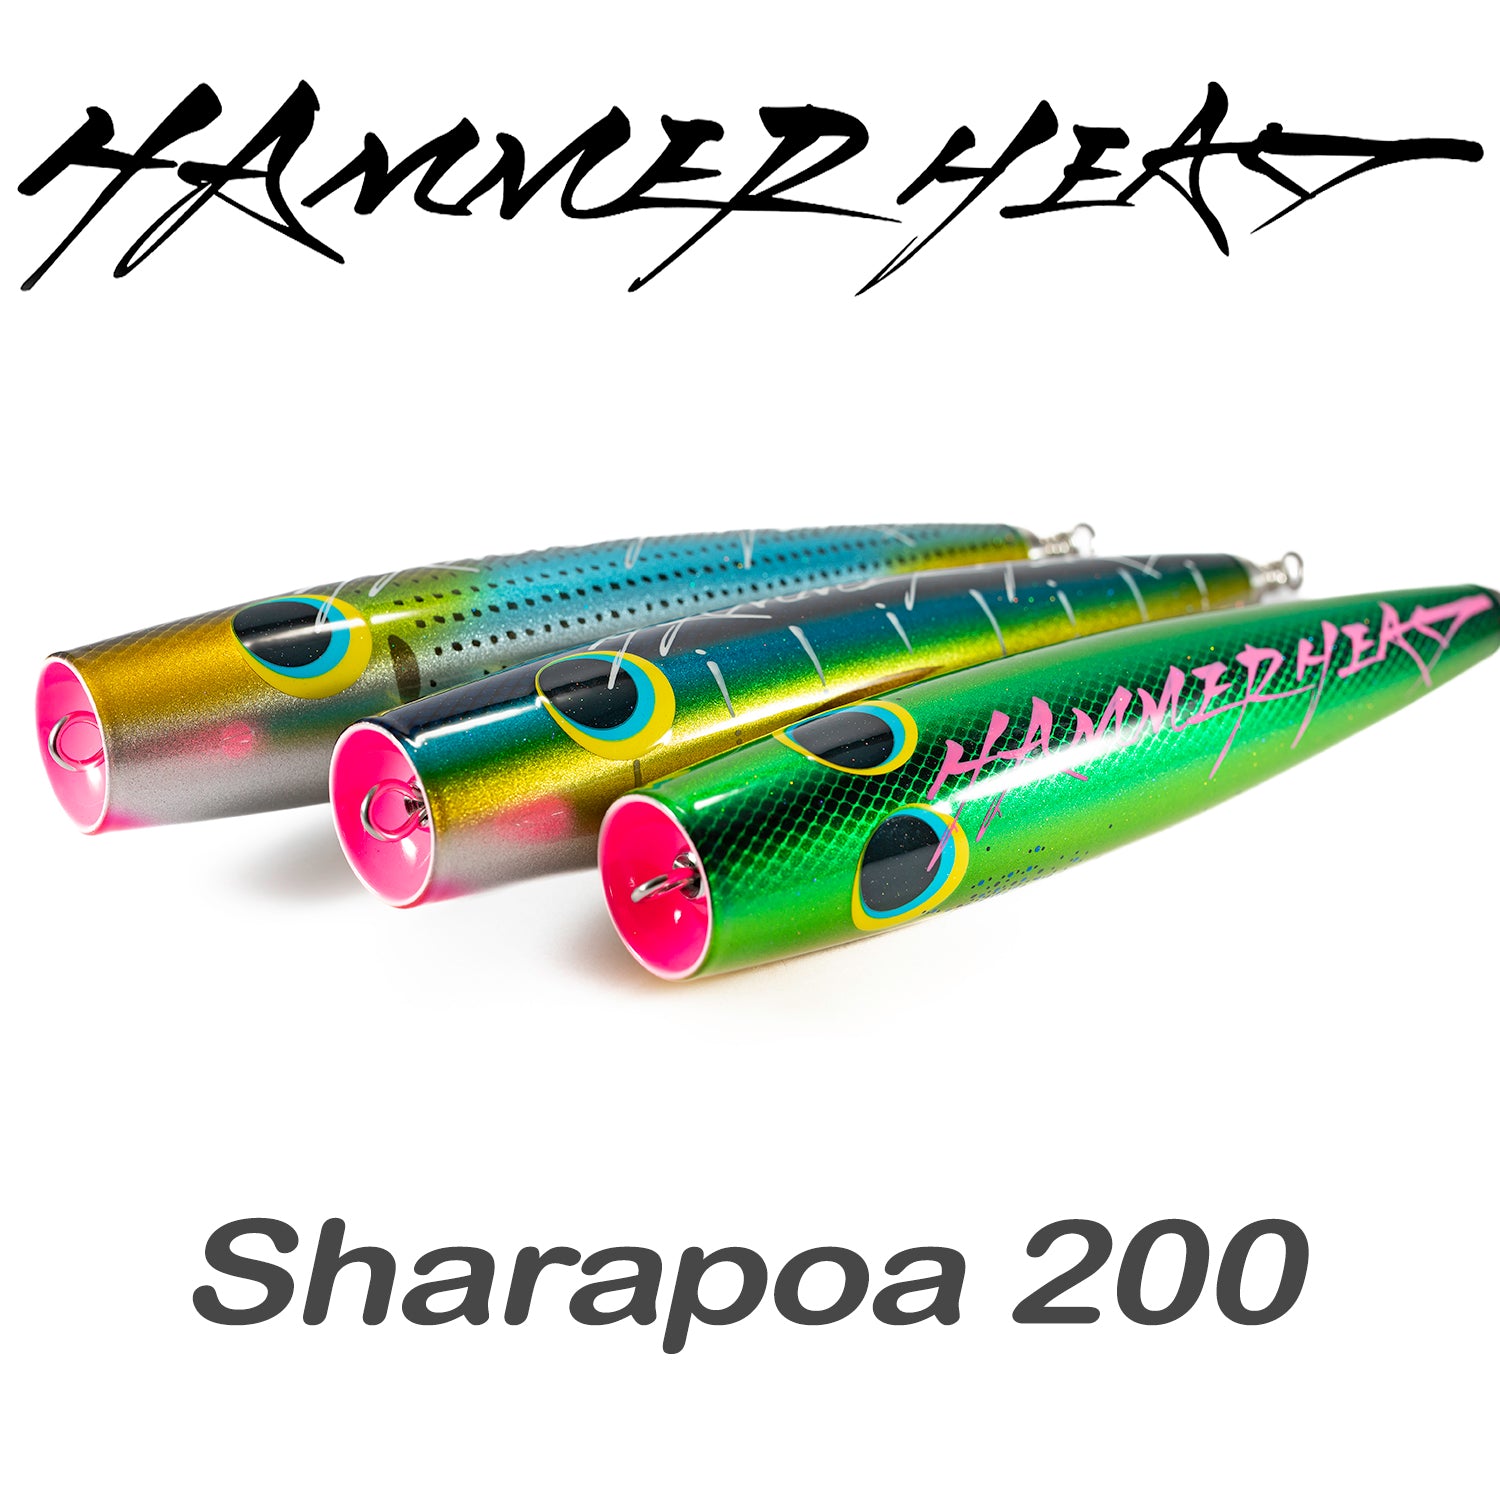 Hammerhead Sharapoa 200